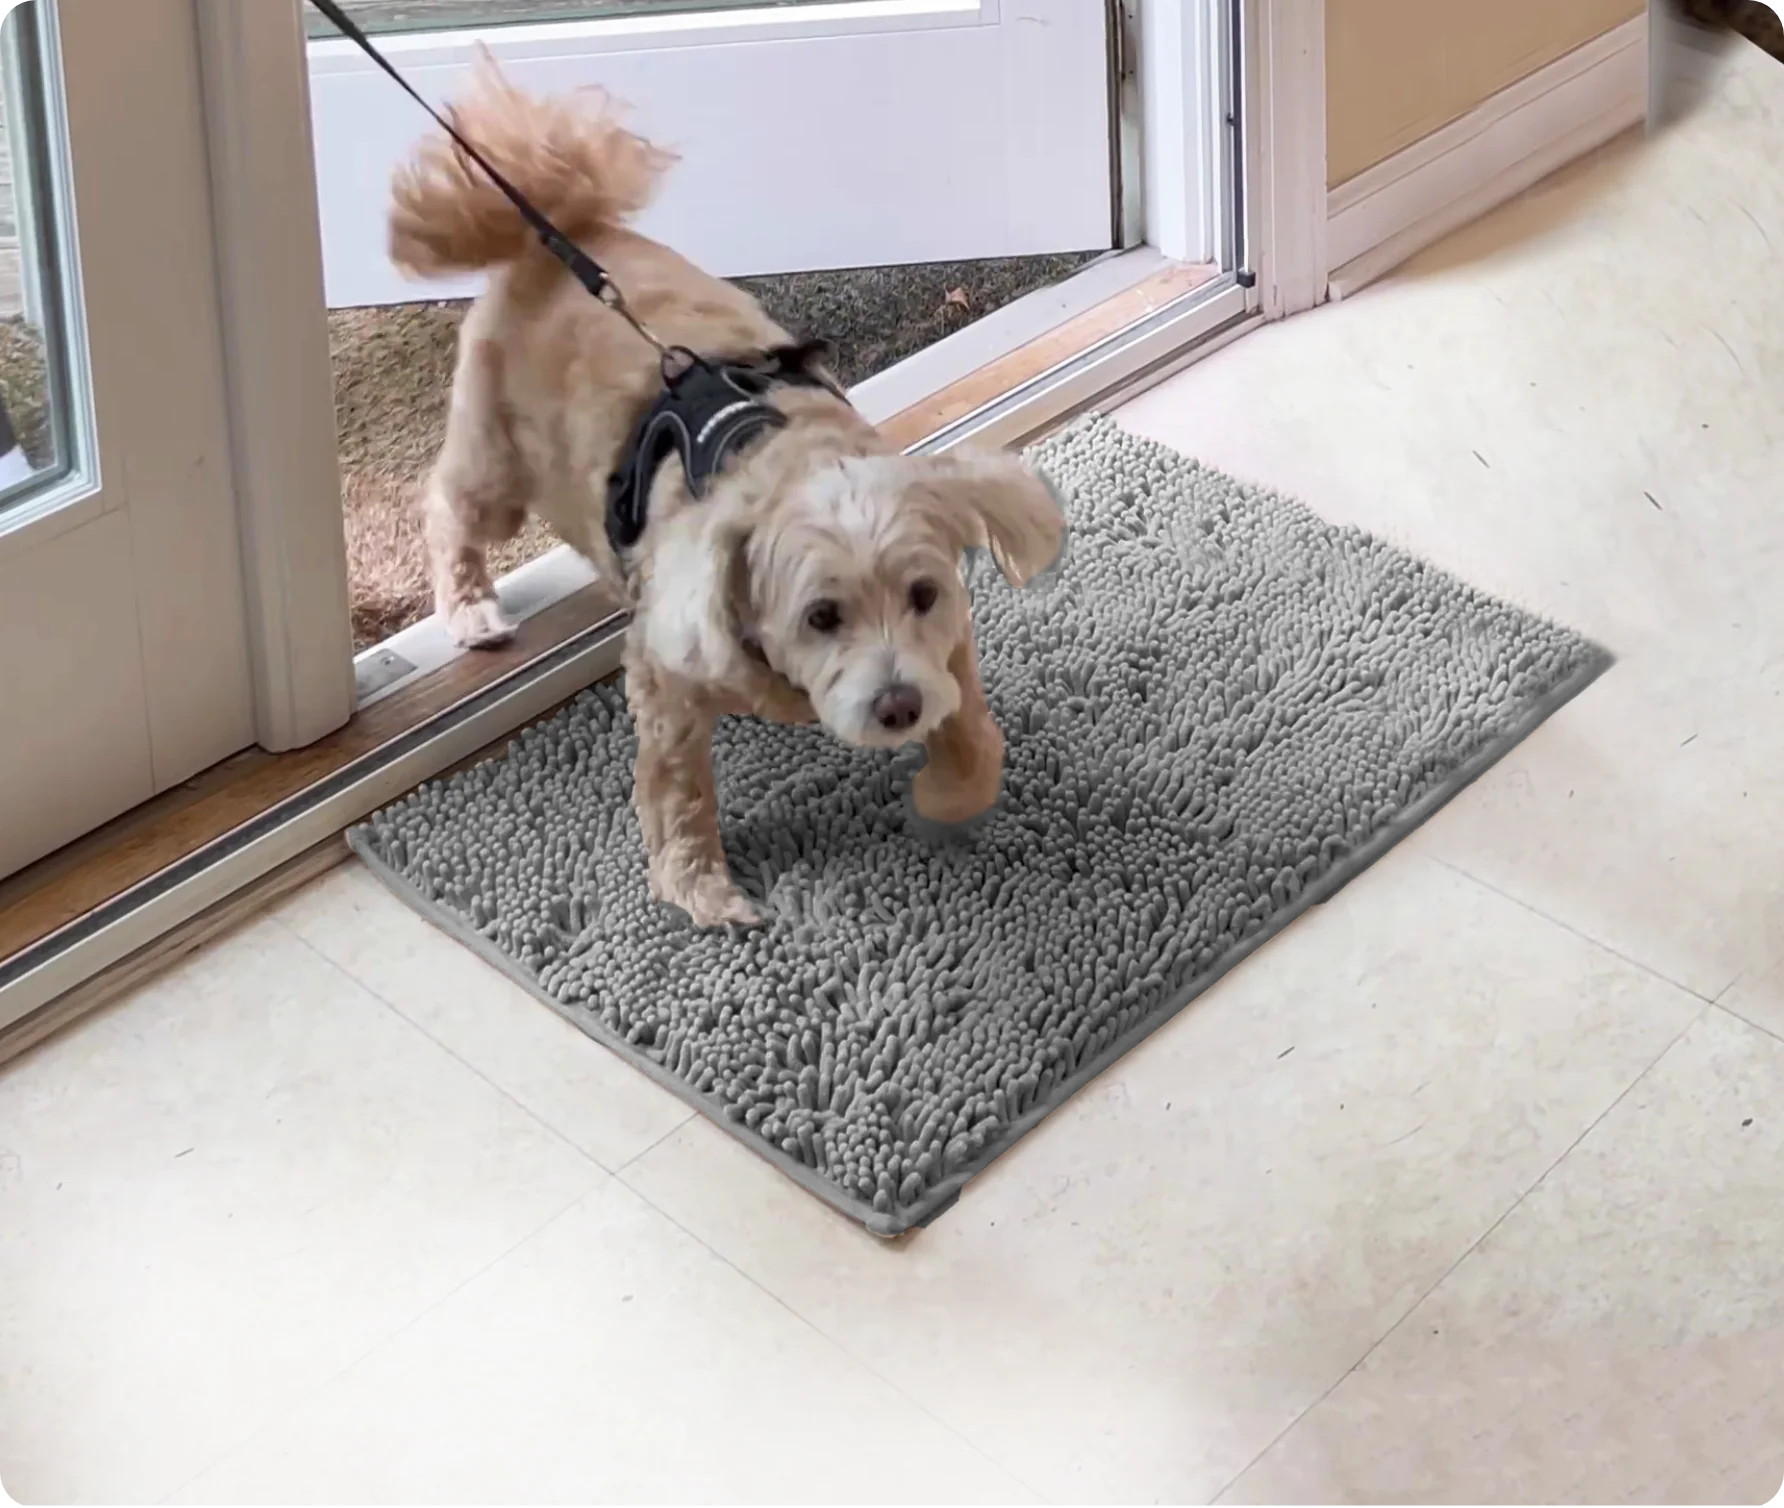 FURHAVEN Muddy Paws Towel & Shammy Dog Mat, Gray, Small 